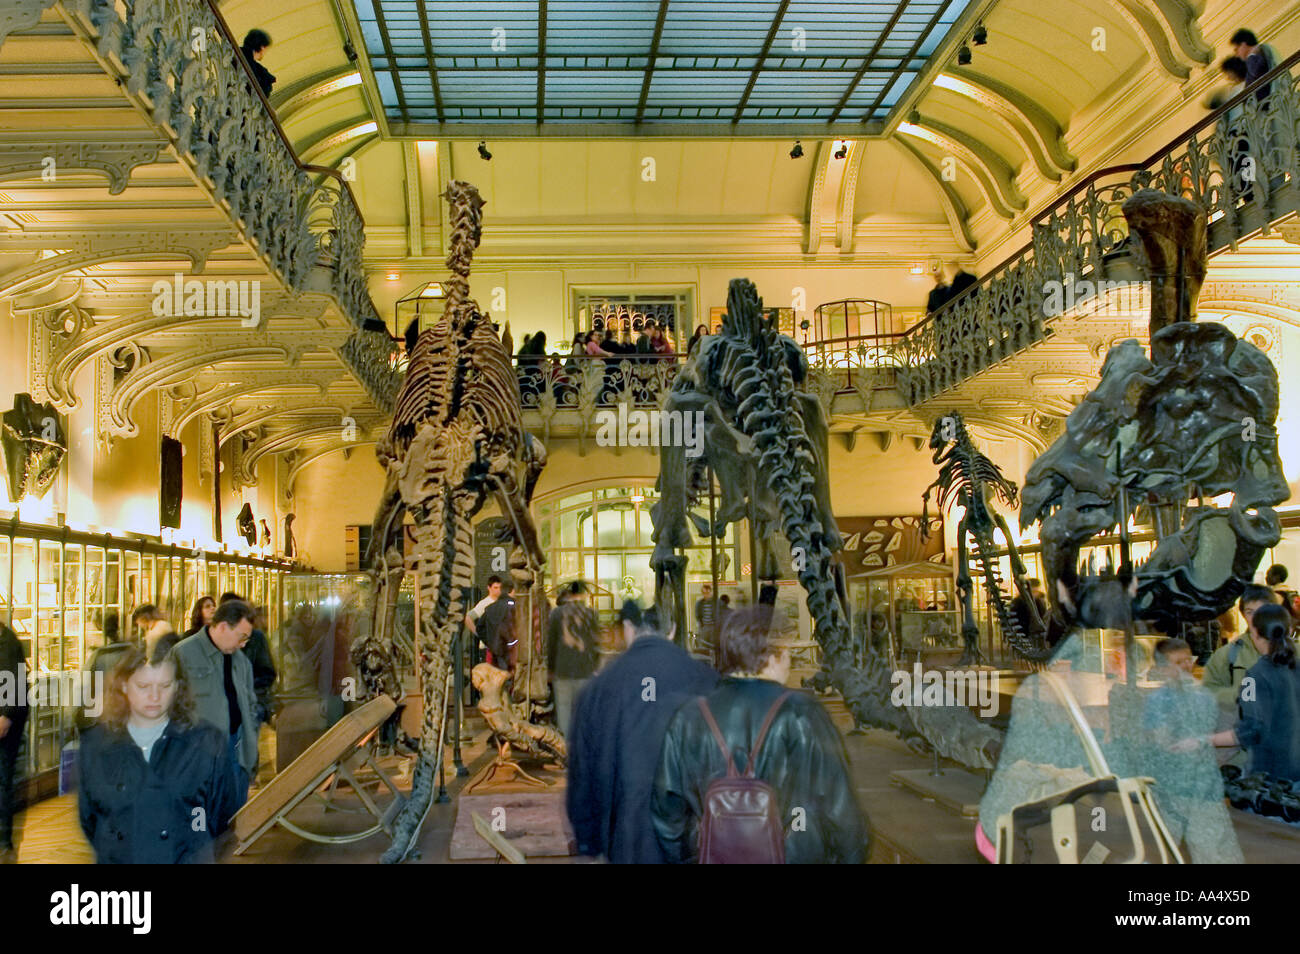 Paris frankreich, Weitwinkel, Familienbesuch 'Museumsnacht' im 'Museum of Natural History' Dinosaurier Exhibit Collection, Museum histoire naturelle Stockfoto